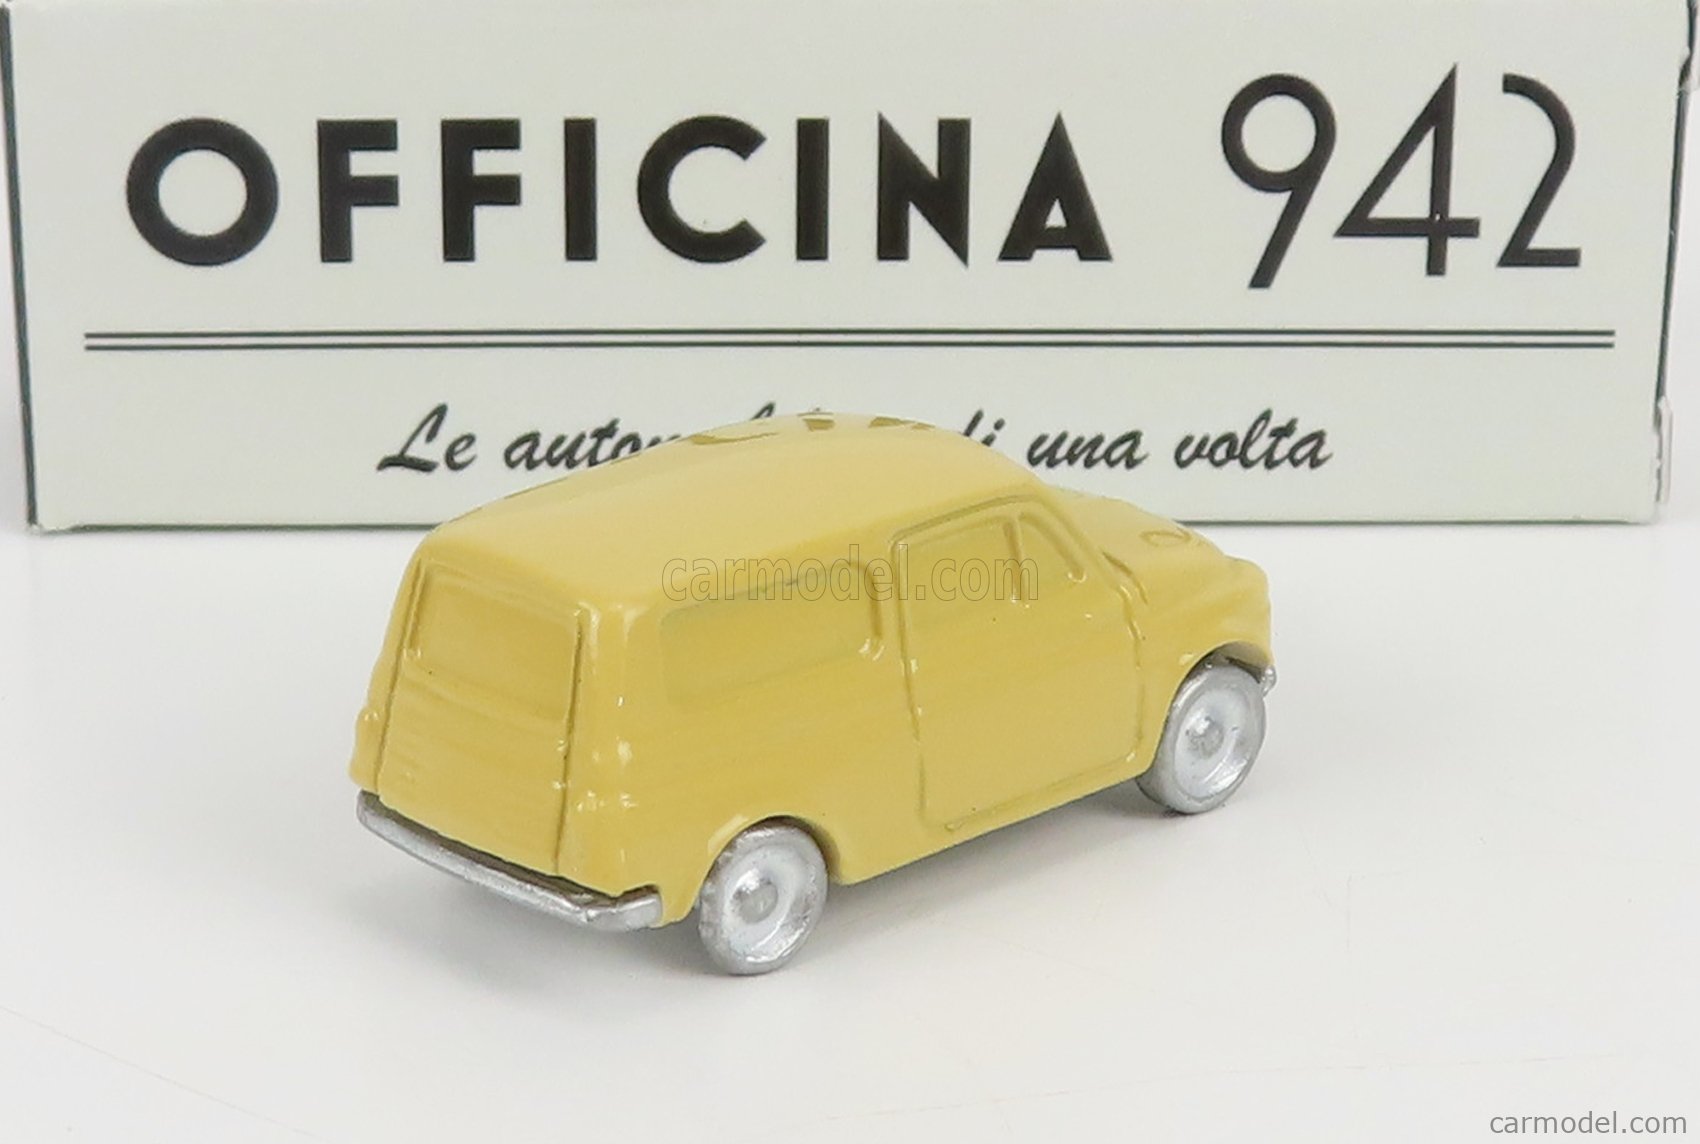 OFFICINA-942 ART2031A Echelle 1/76  FIAT 500 UTILITY FRANCIS LOMBARDI 1959 BEIGE